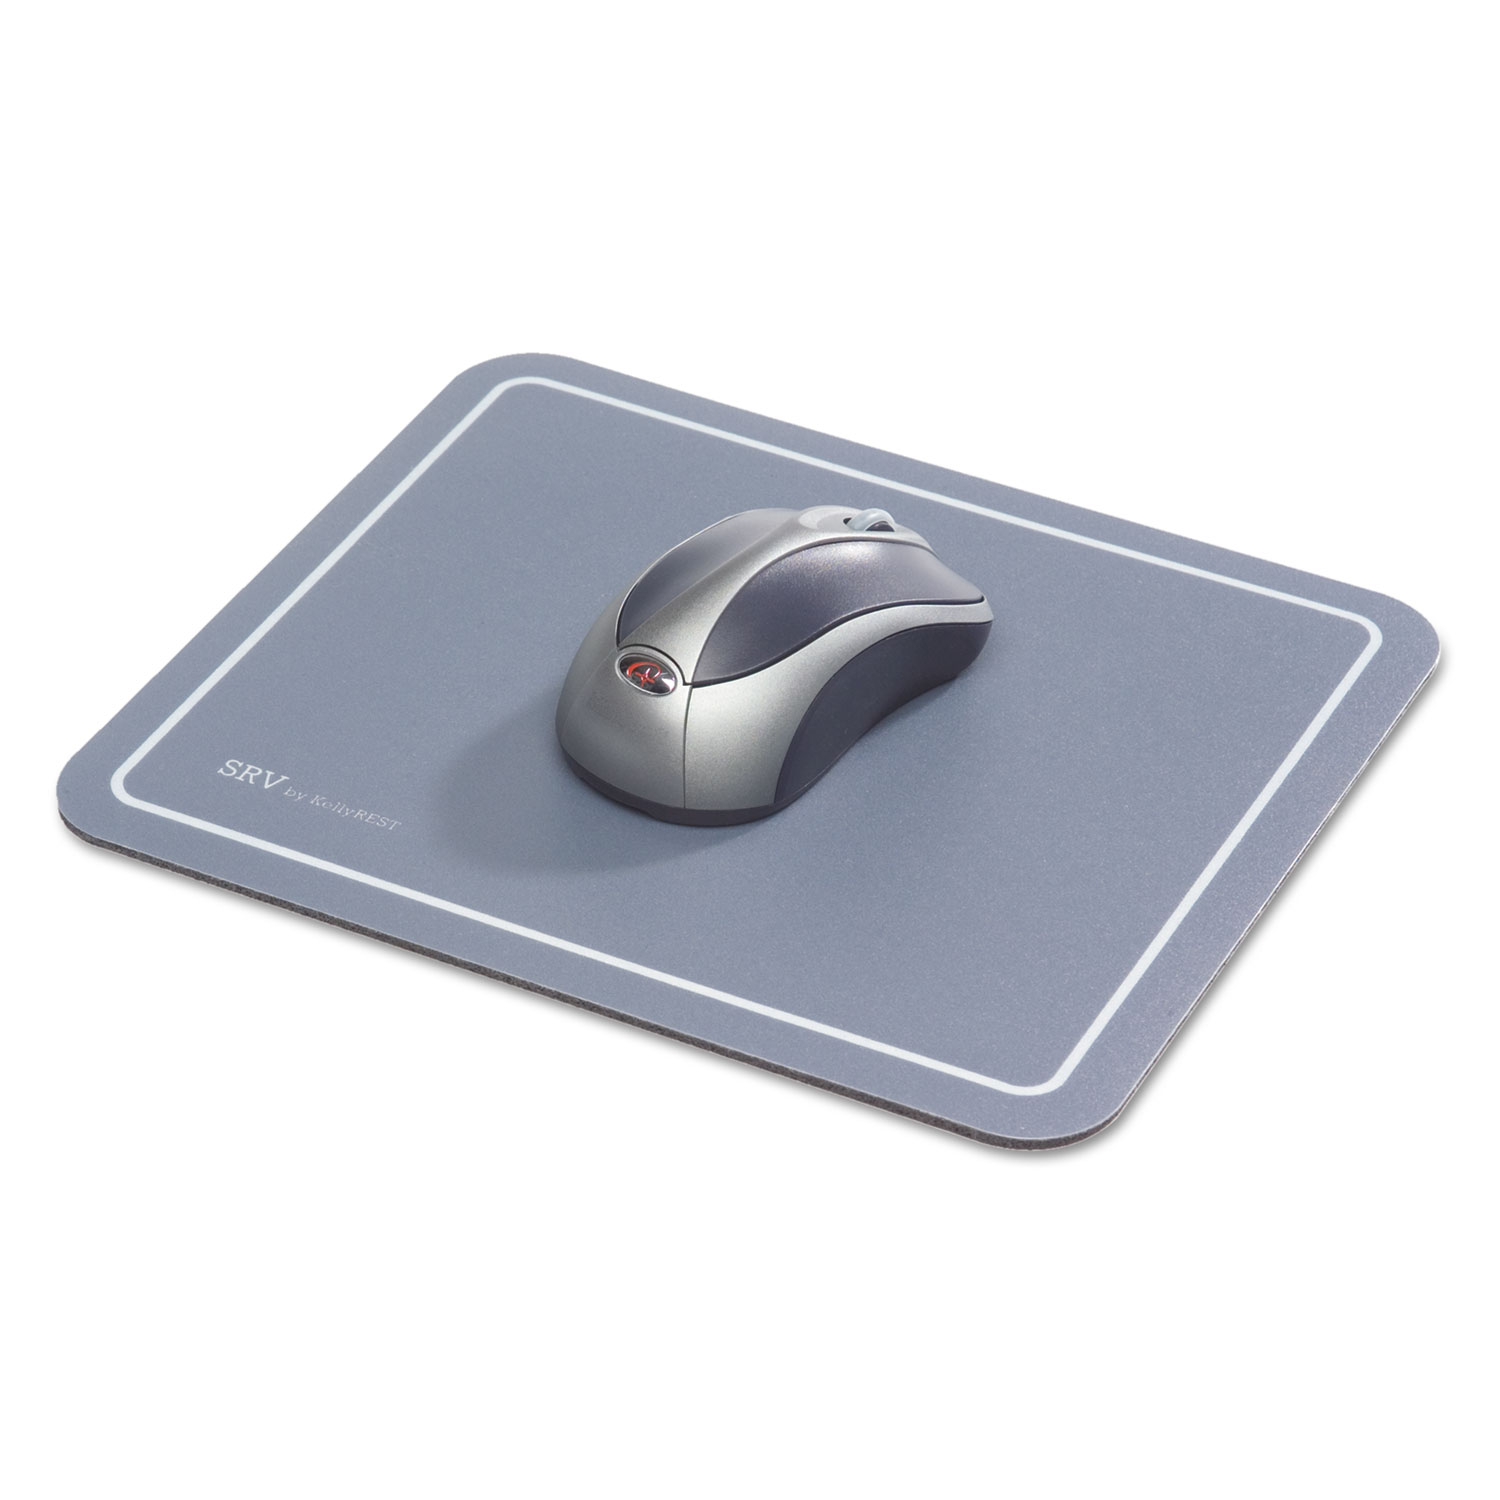 Optical Mouse Pad, 9 x 7-3/4 x 1/8, Gray